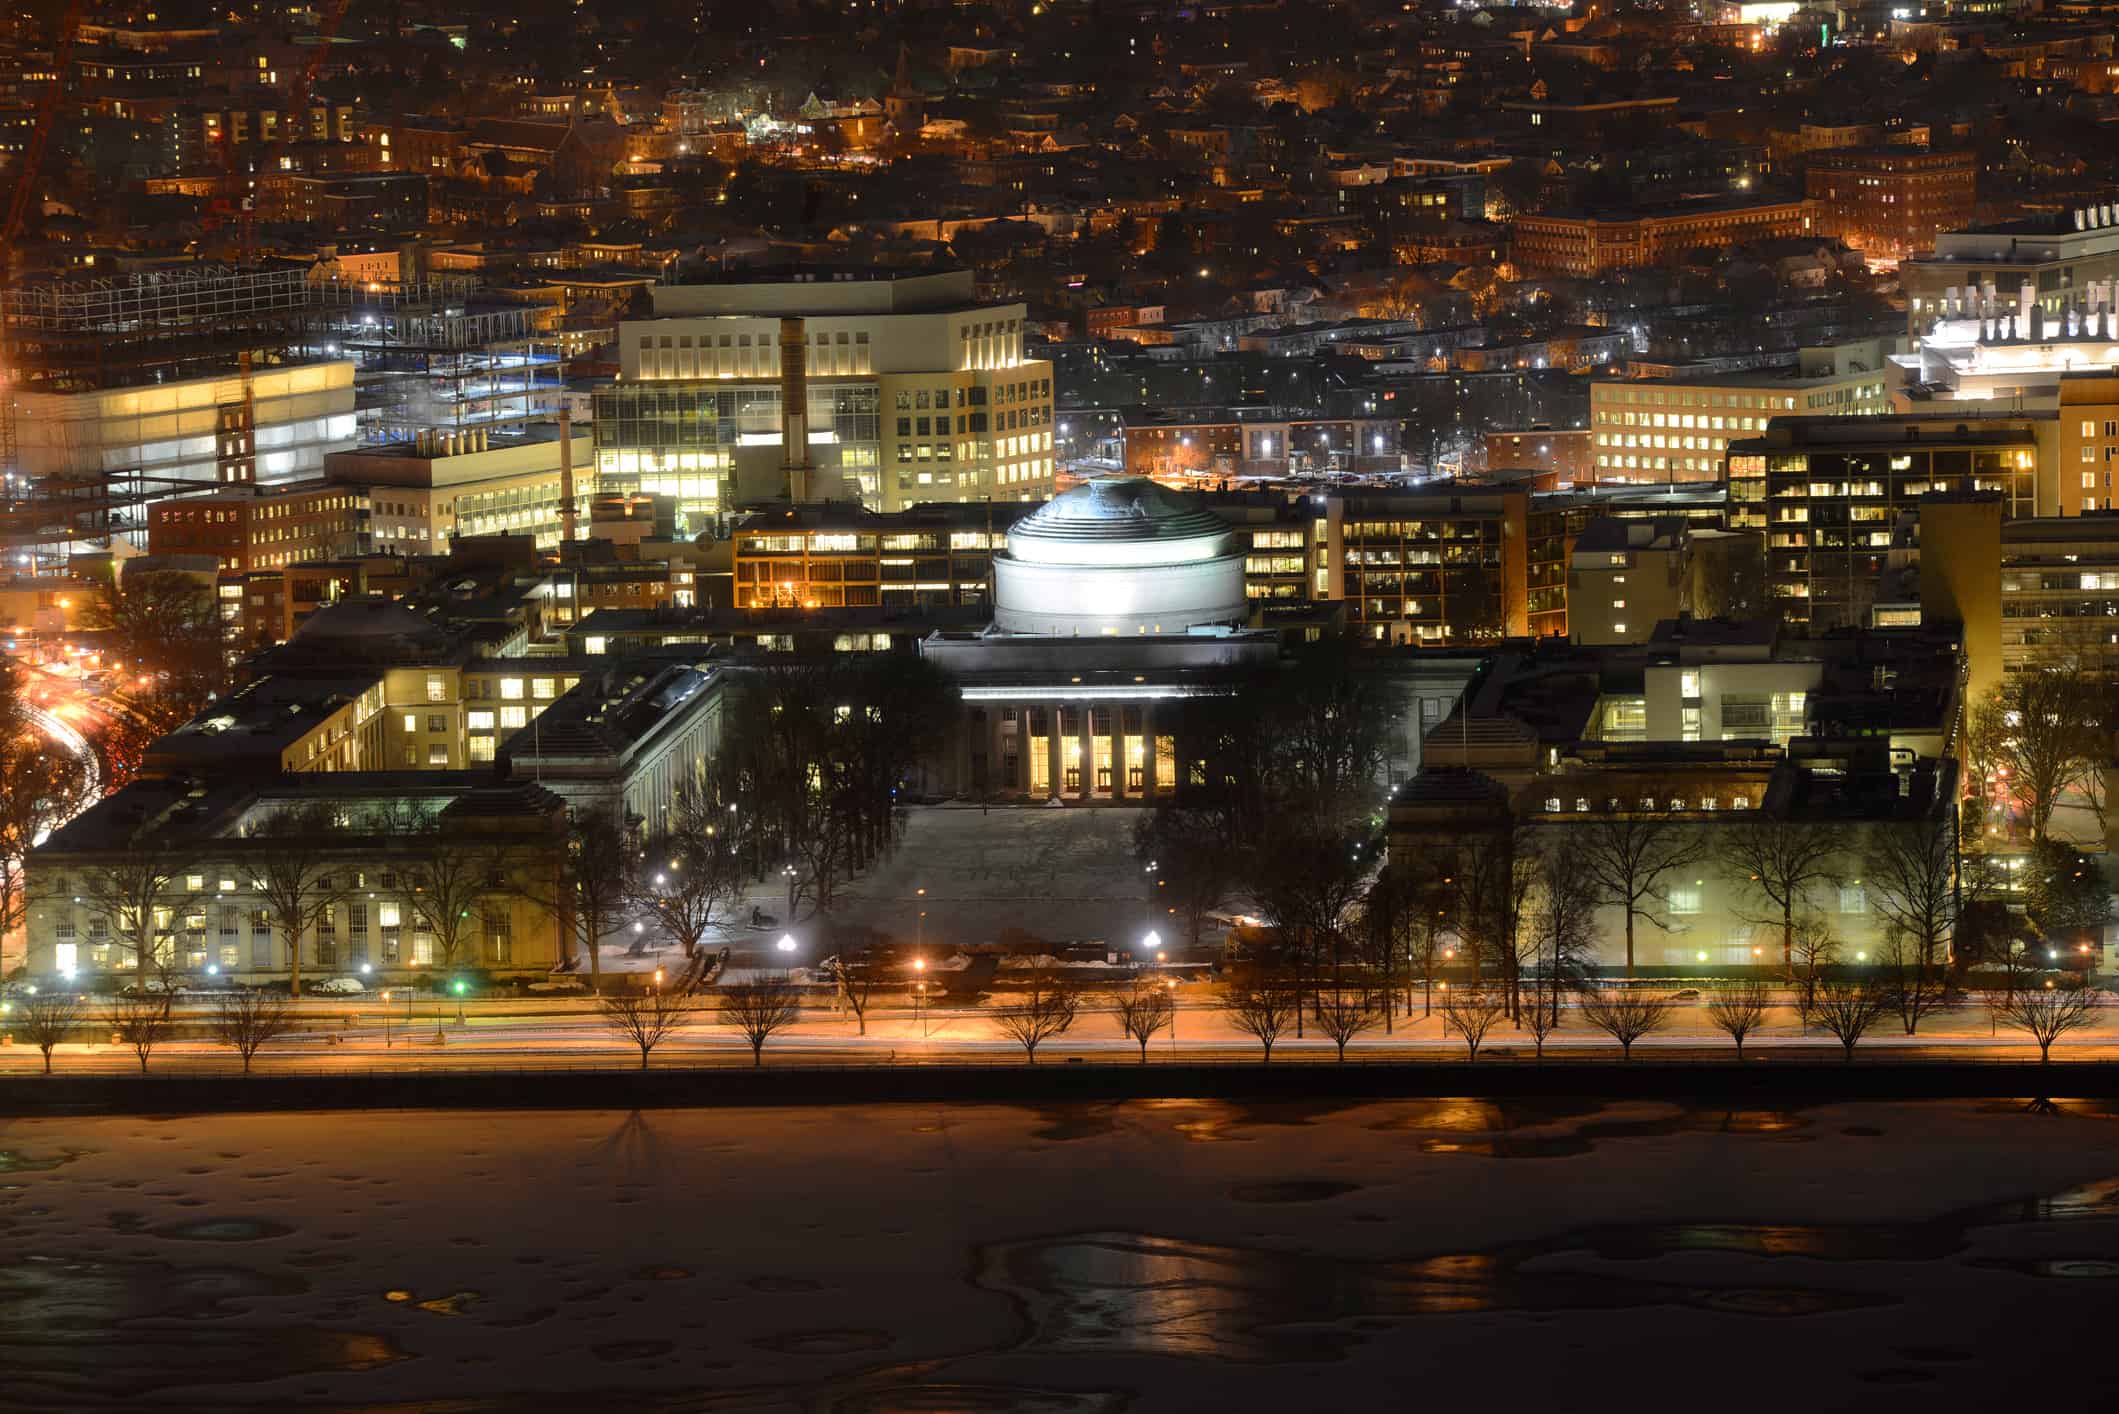 Great Dome of MIT, Boston, Massachusetts